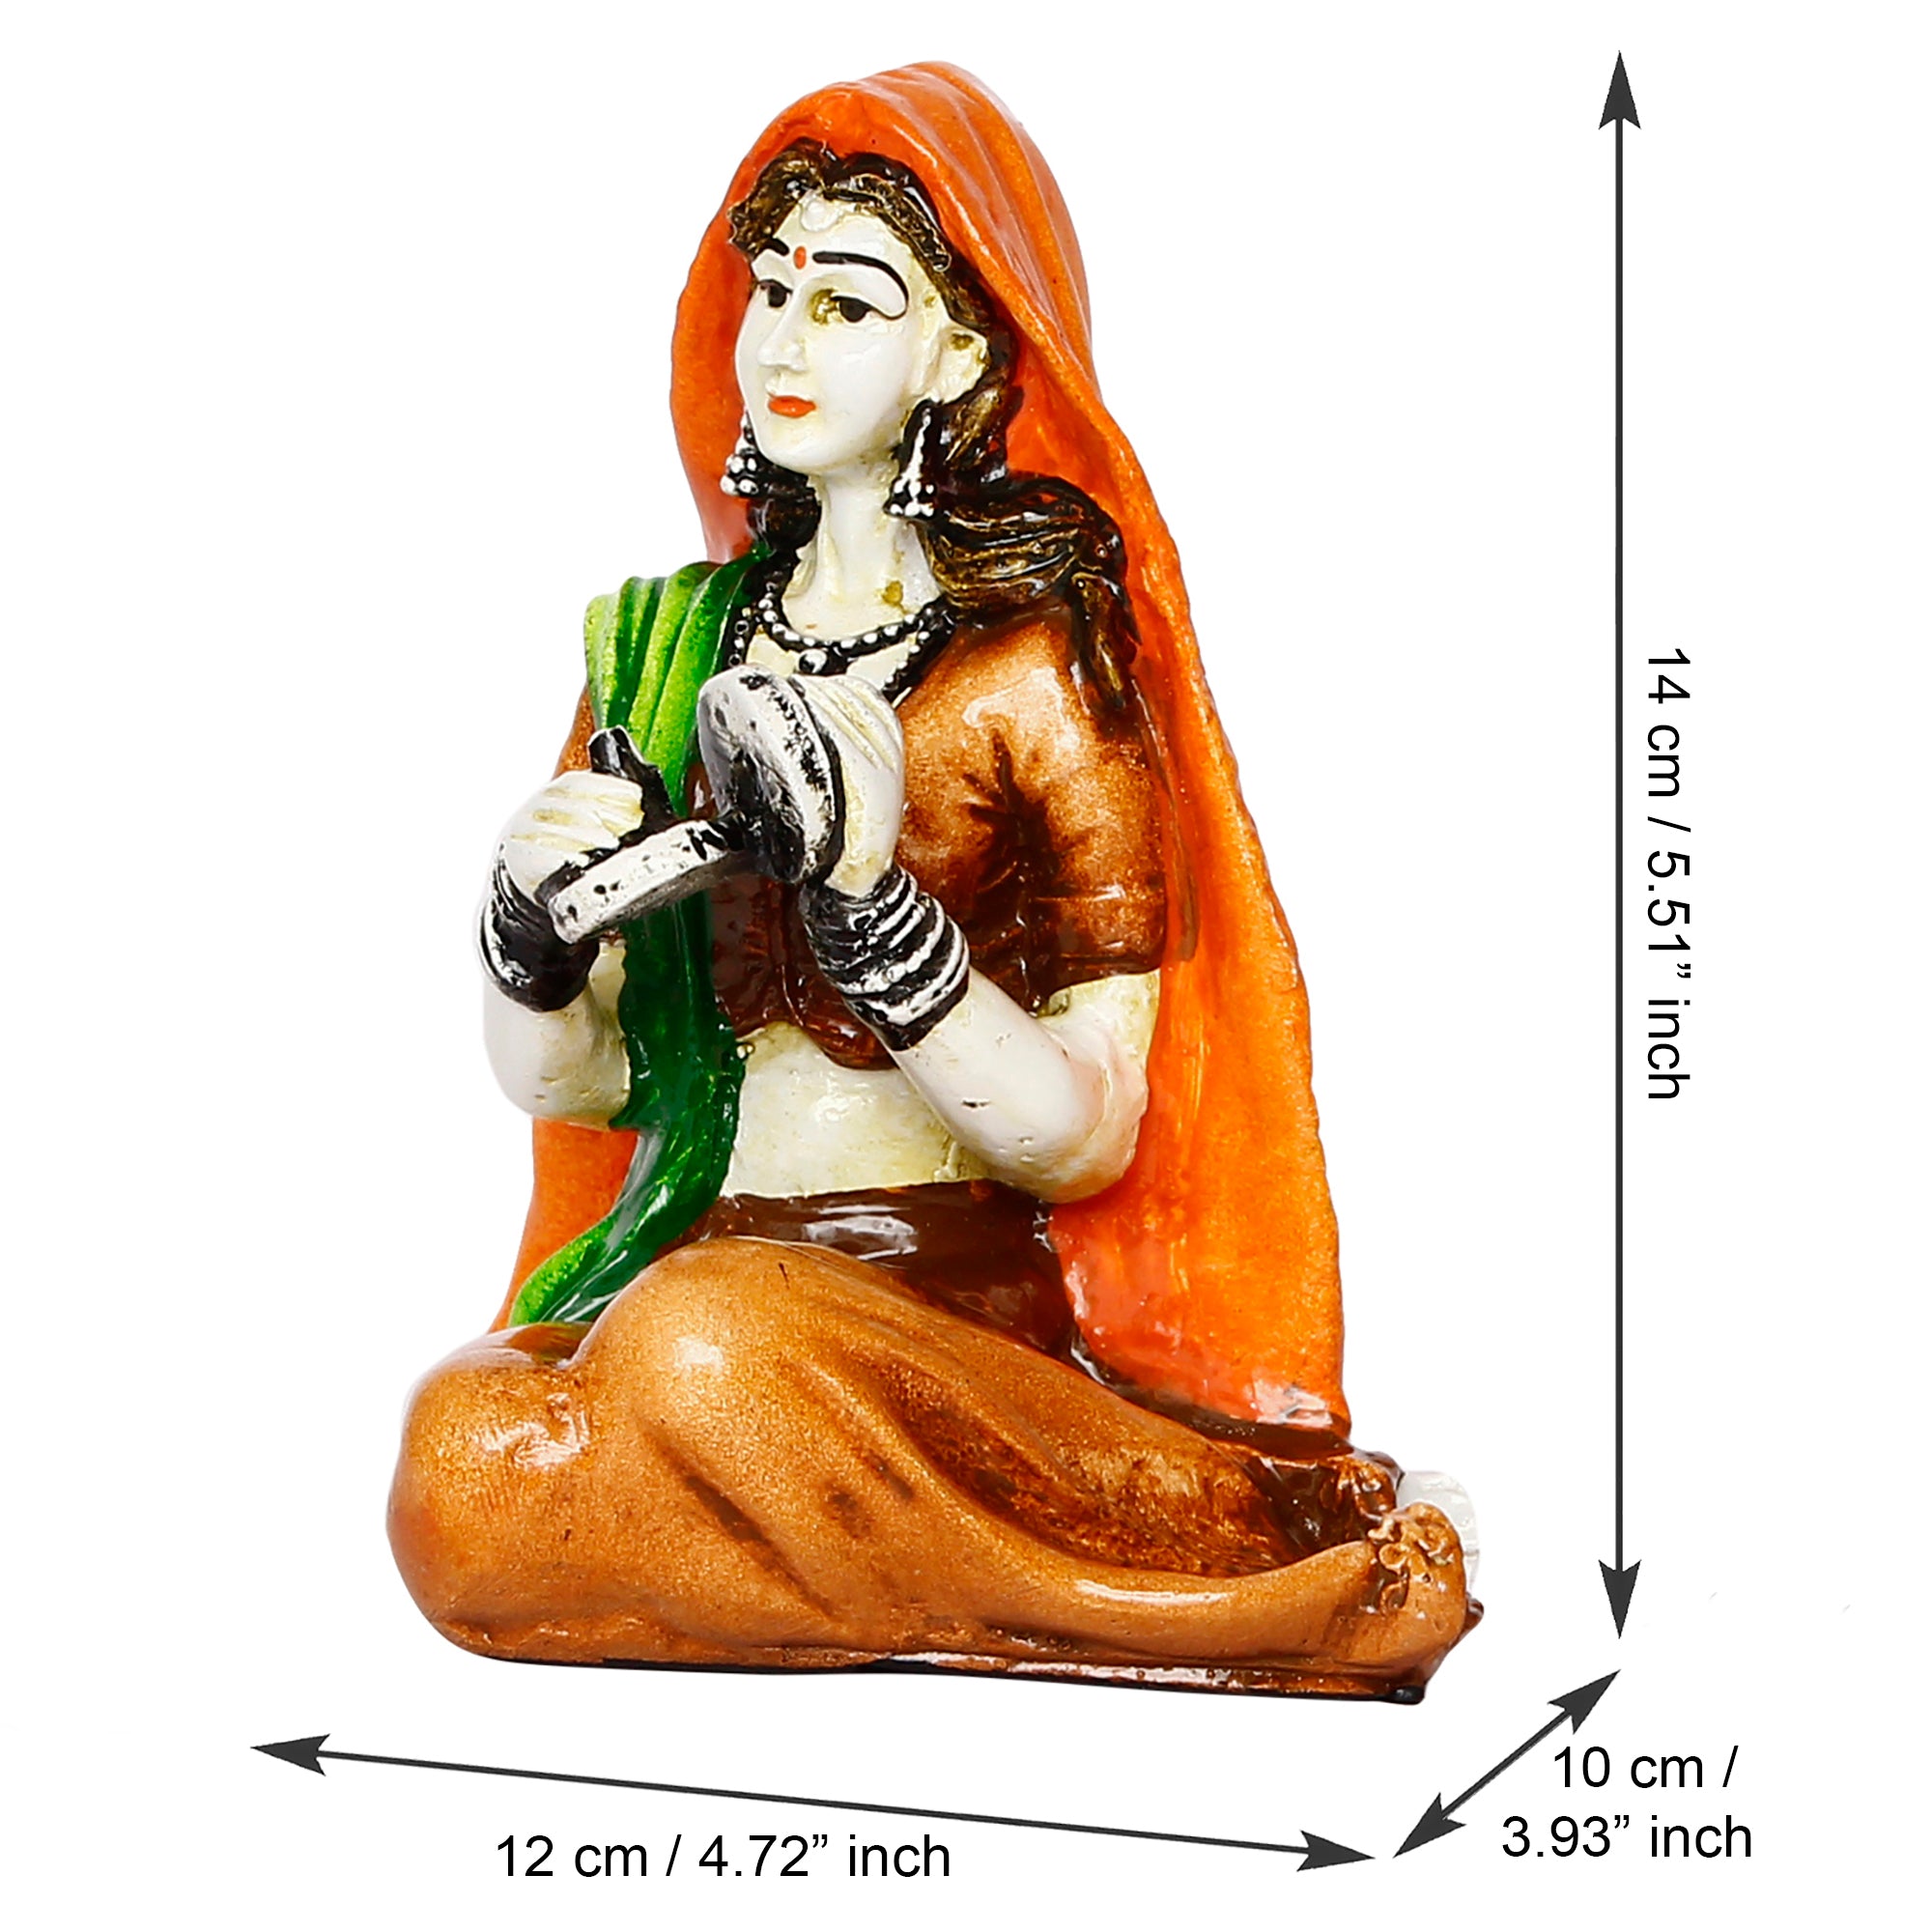 Polyresin Rajasthani Women Statue Handcrafted Human Figurine Decorative Showpiece 3